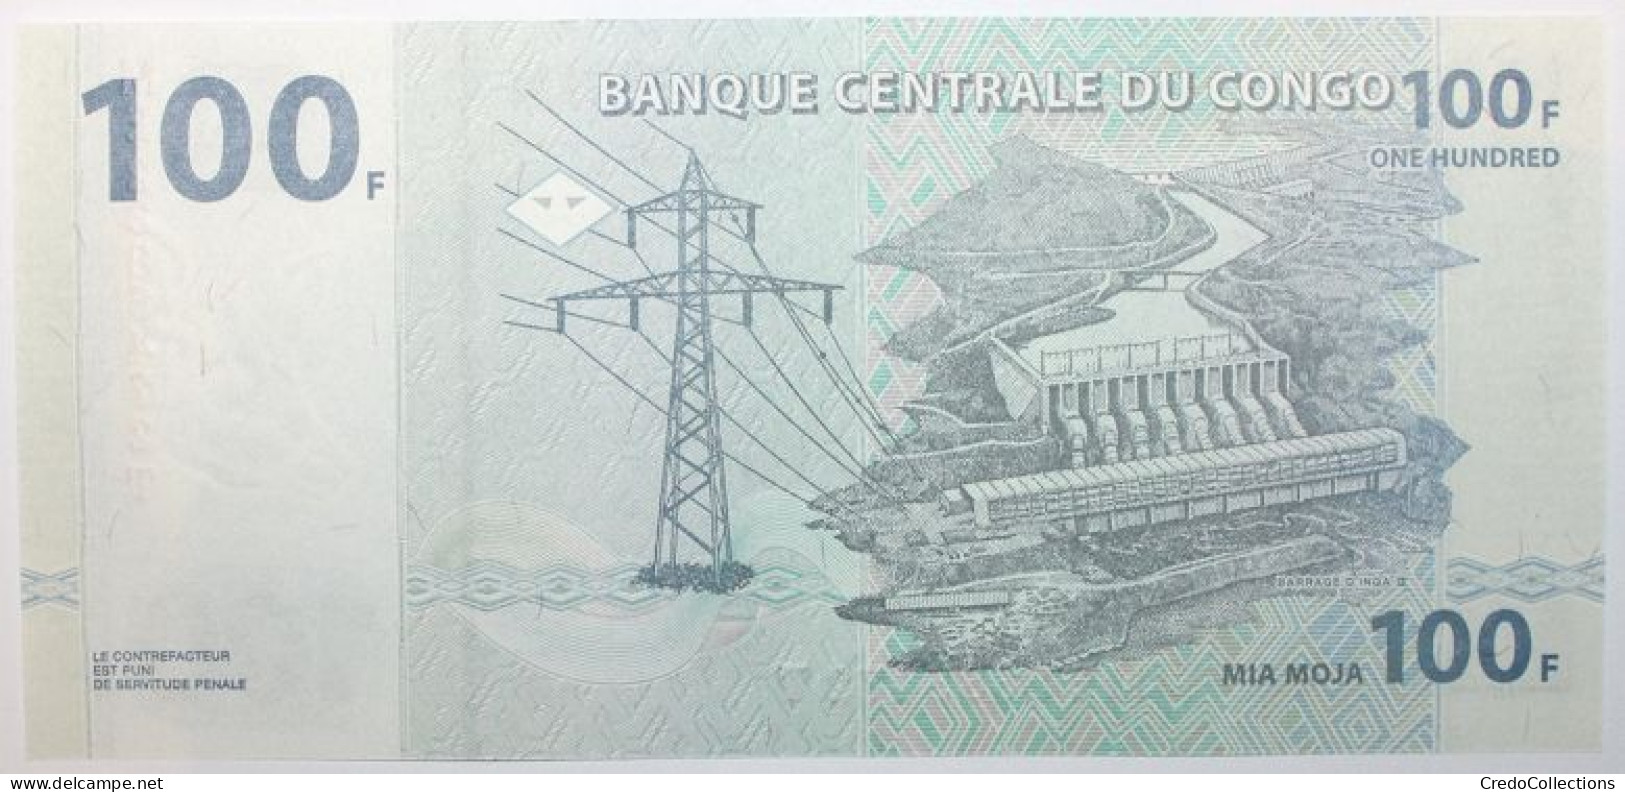 Congo (RD) - 100 Francs - 2022 - PICK 98c - NEUF - Democratic Republic Of The Congo & Zaire